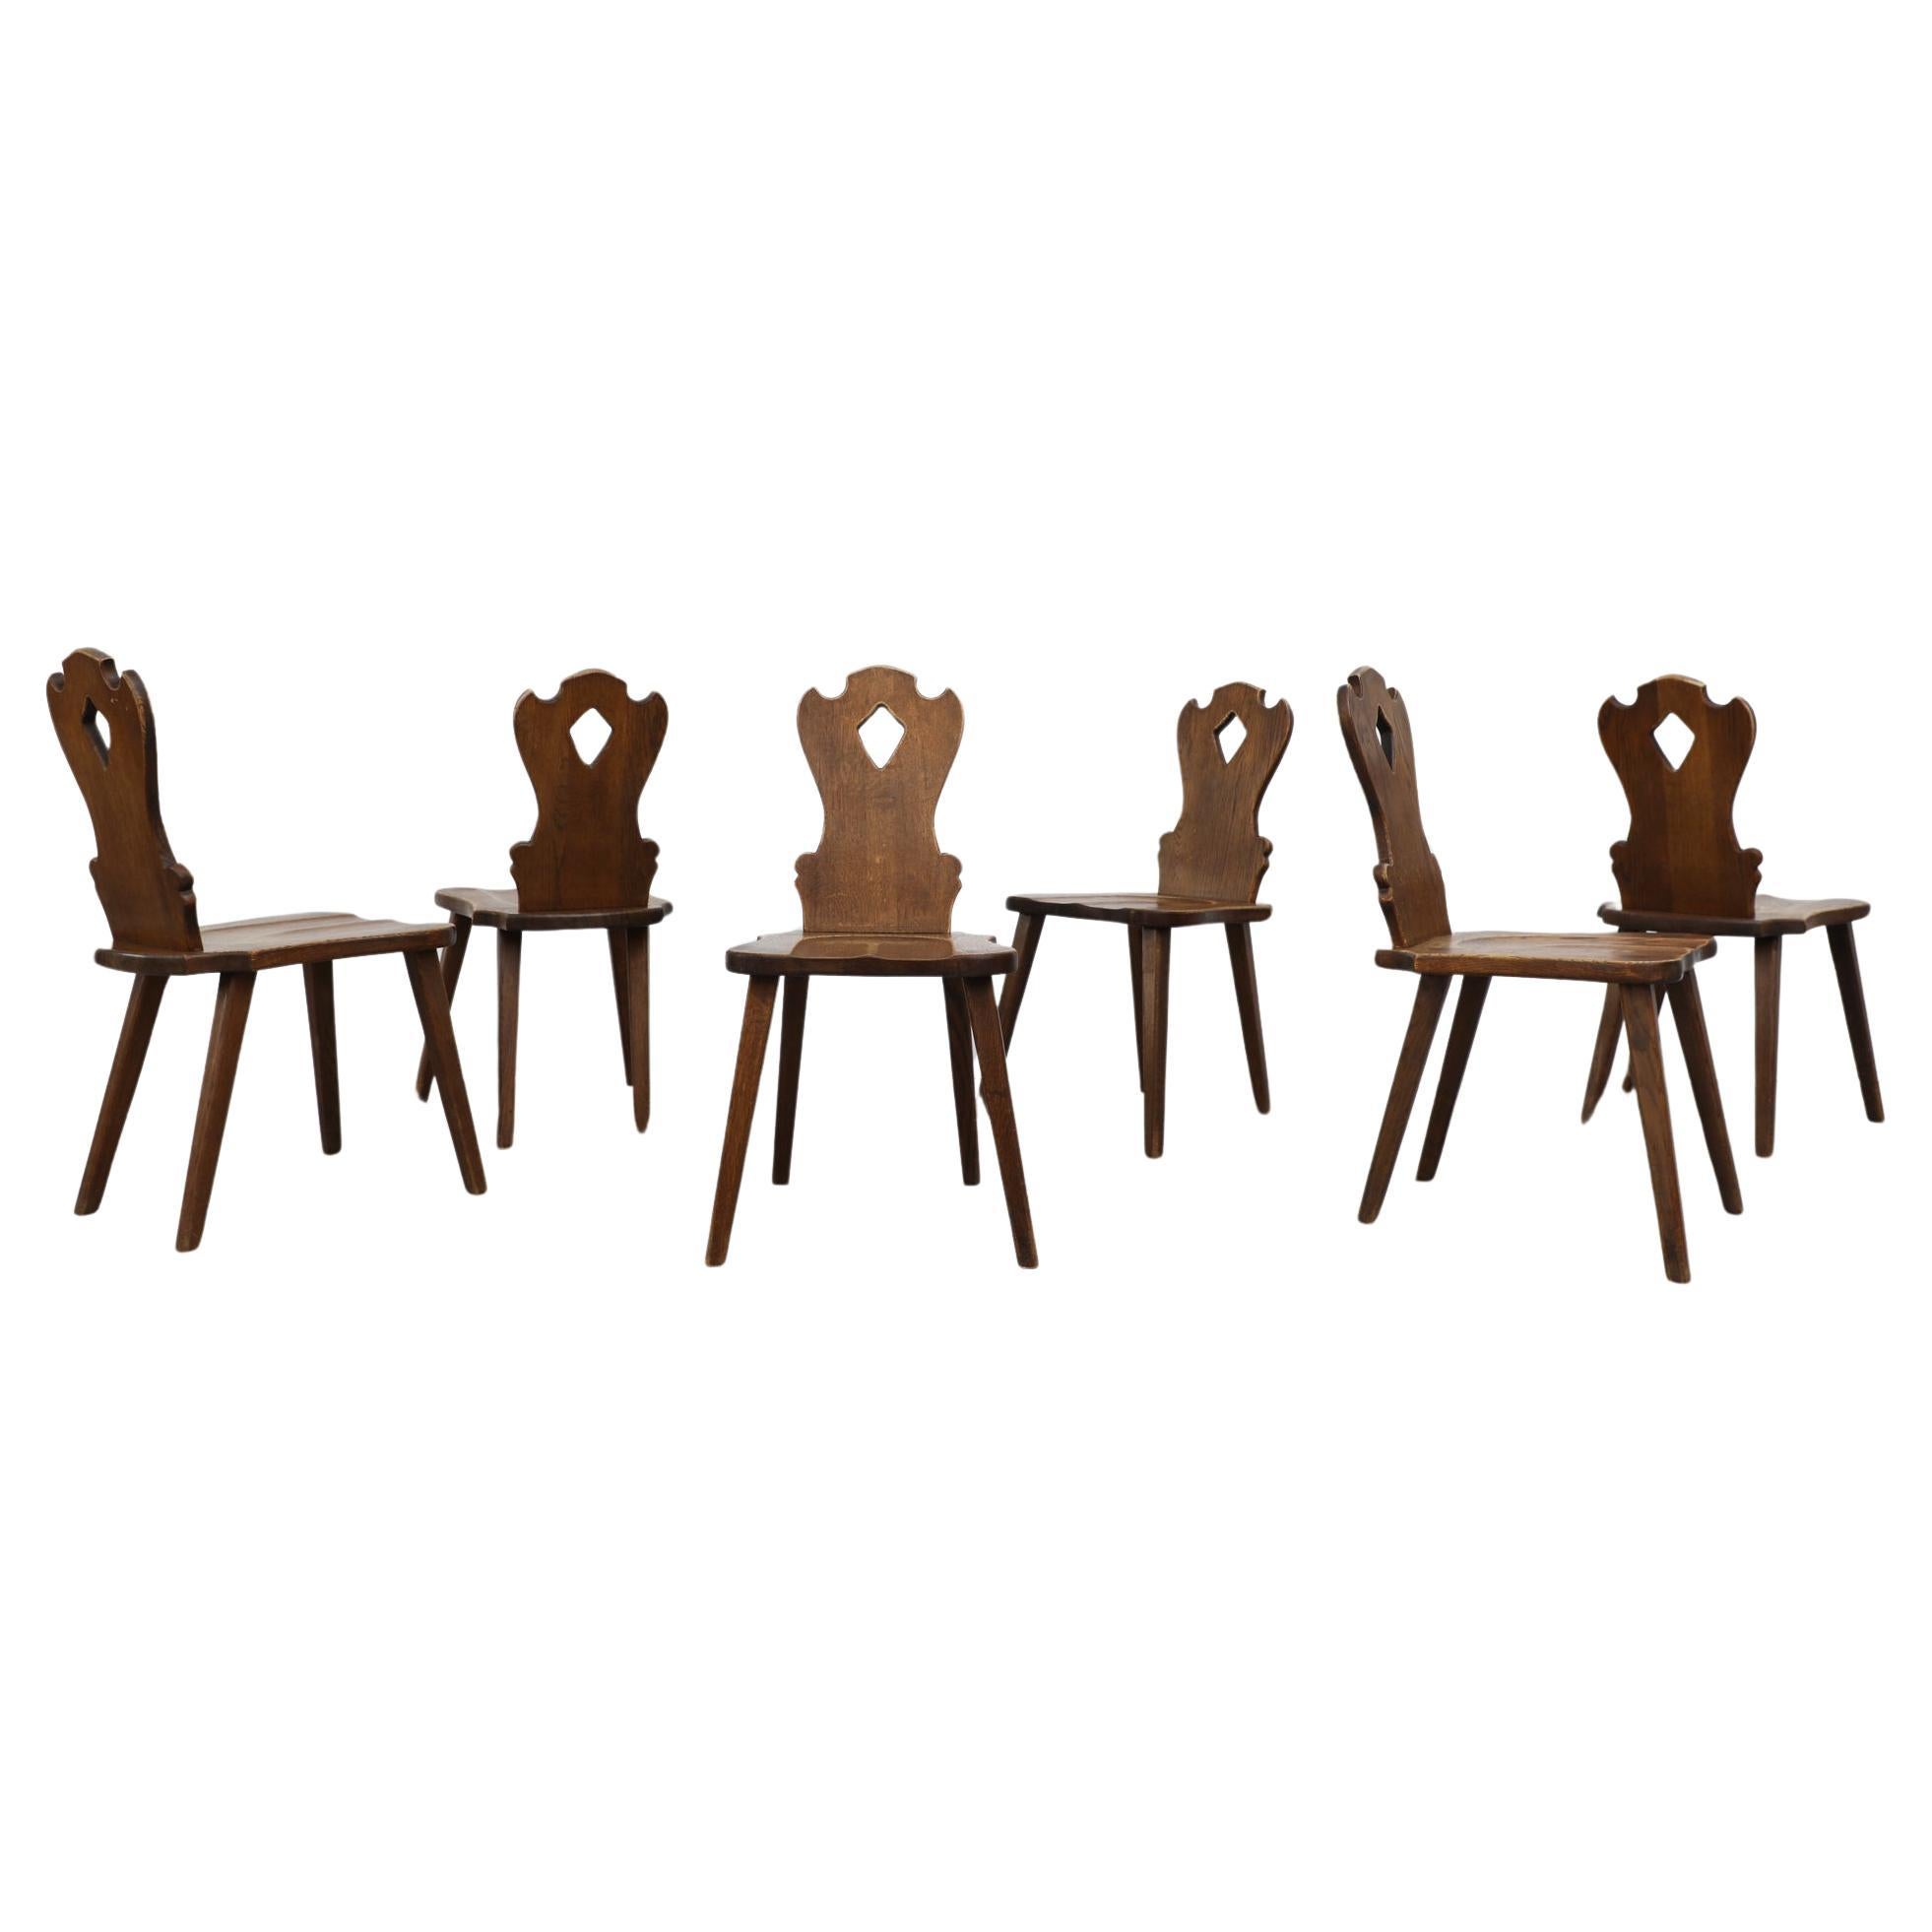 Set of 6 Tyrolean Style Mid-Century Brutalist Organic Carved Dark Oak Chairs